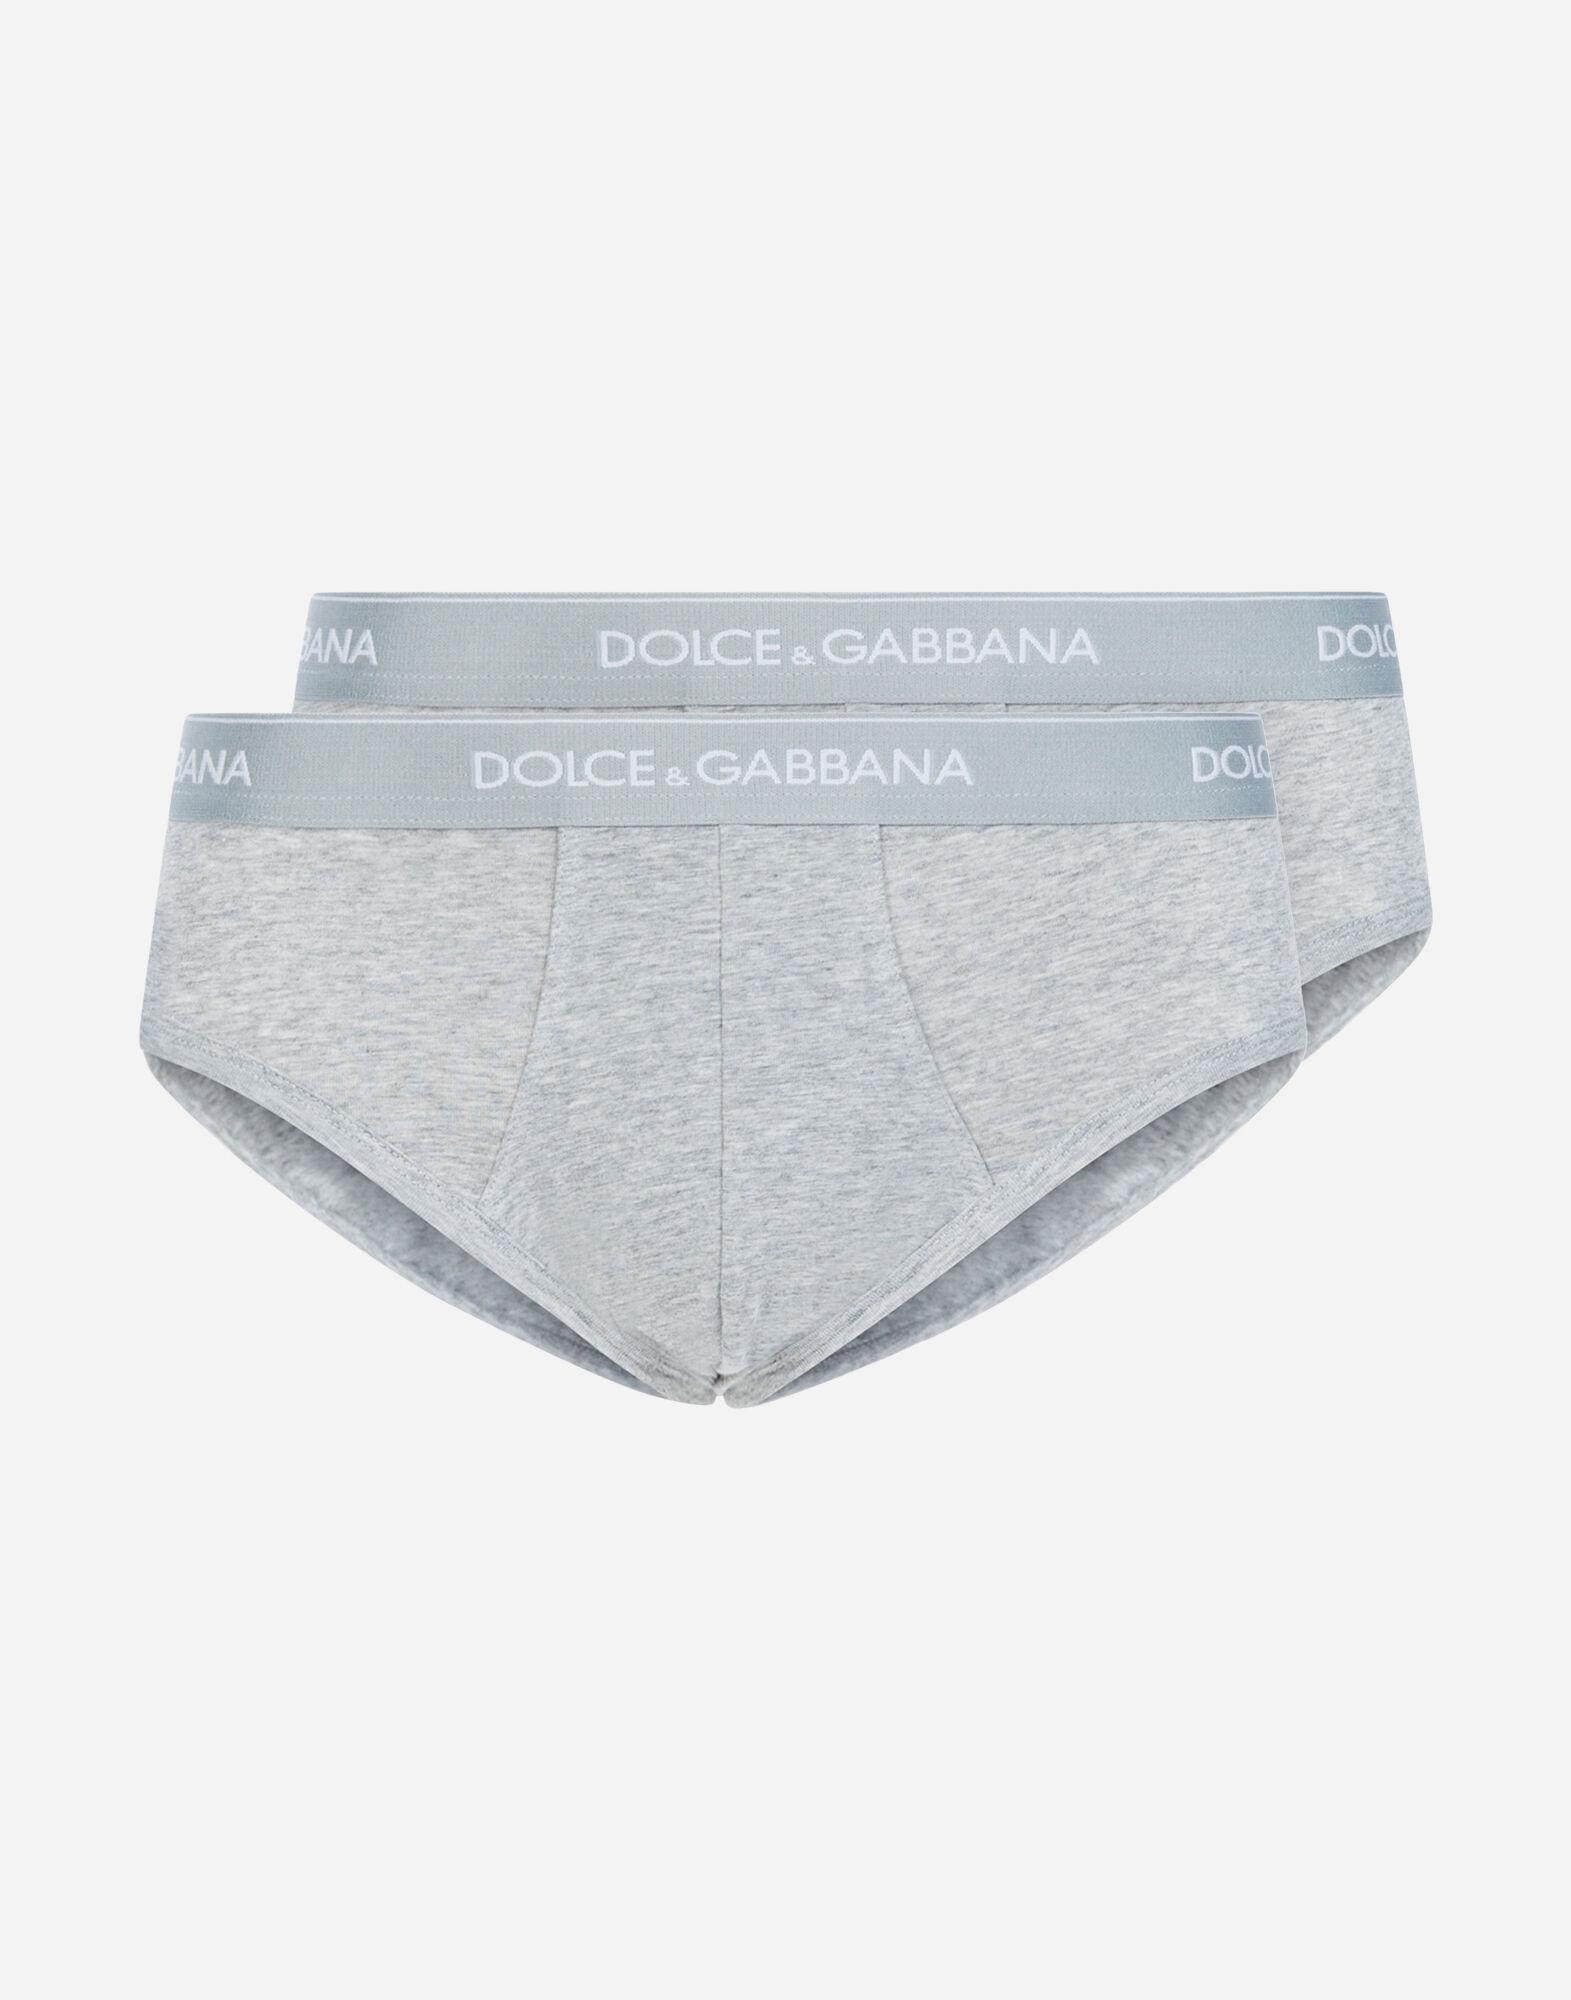 Dolce & Gabbana Synthetic Bi-pack Underwear Briefs In Stretch Cotton in